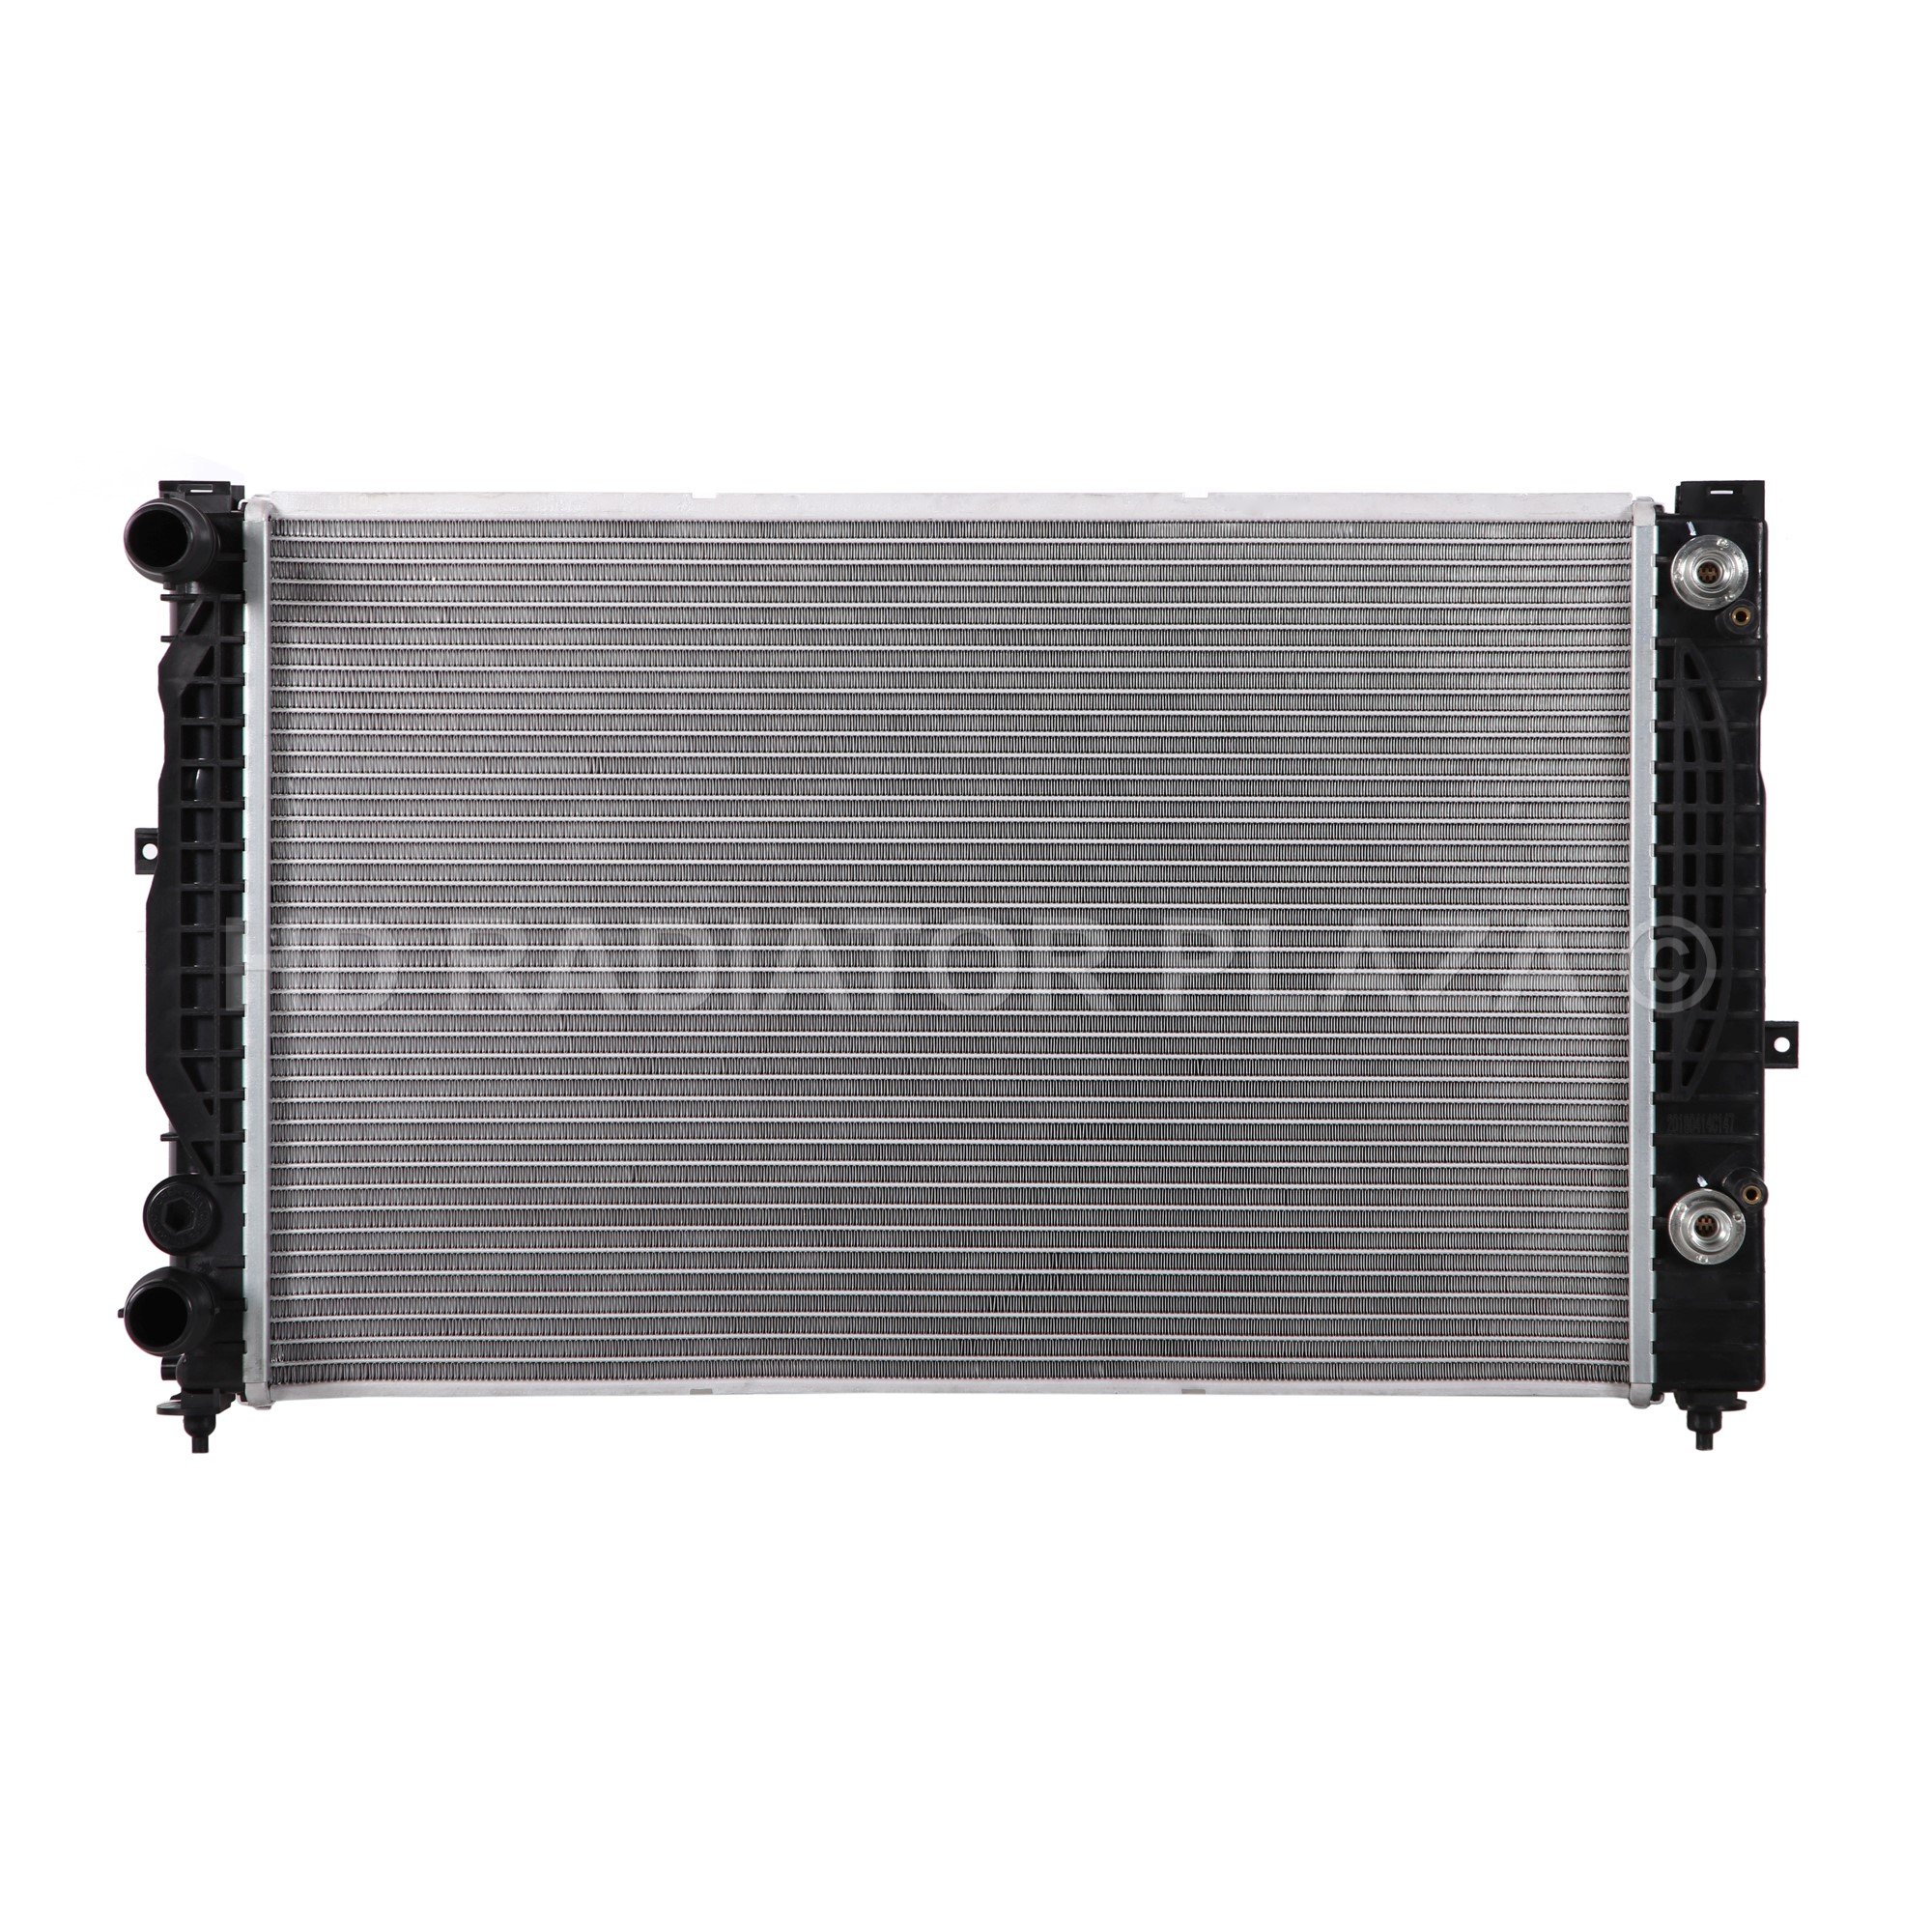 Radiator for 97-05 Radiator for Audi A4/ A4 Quattro, Volkswagen Passat